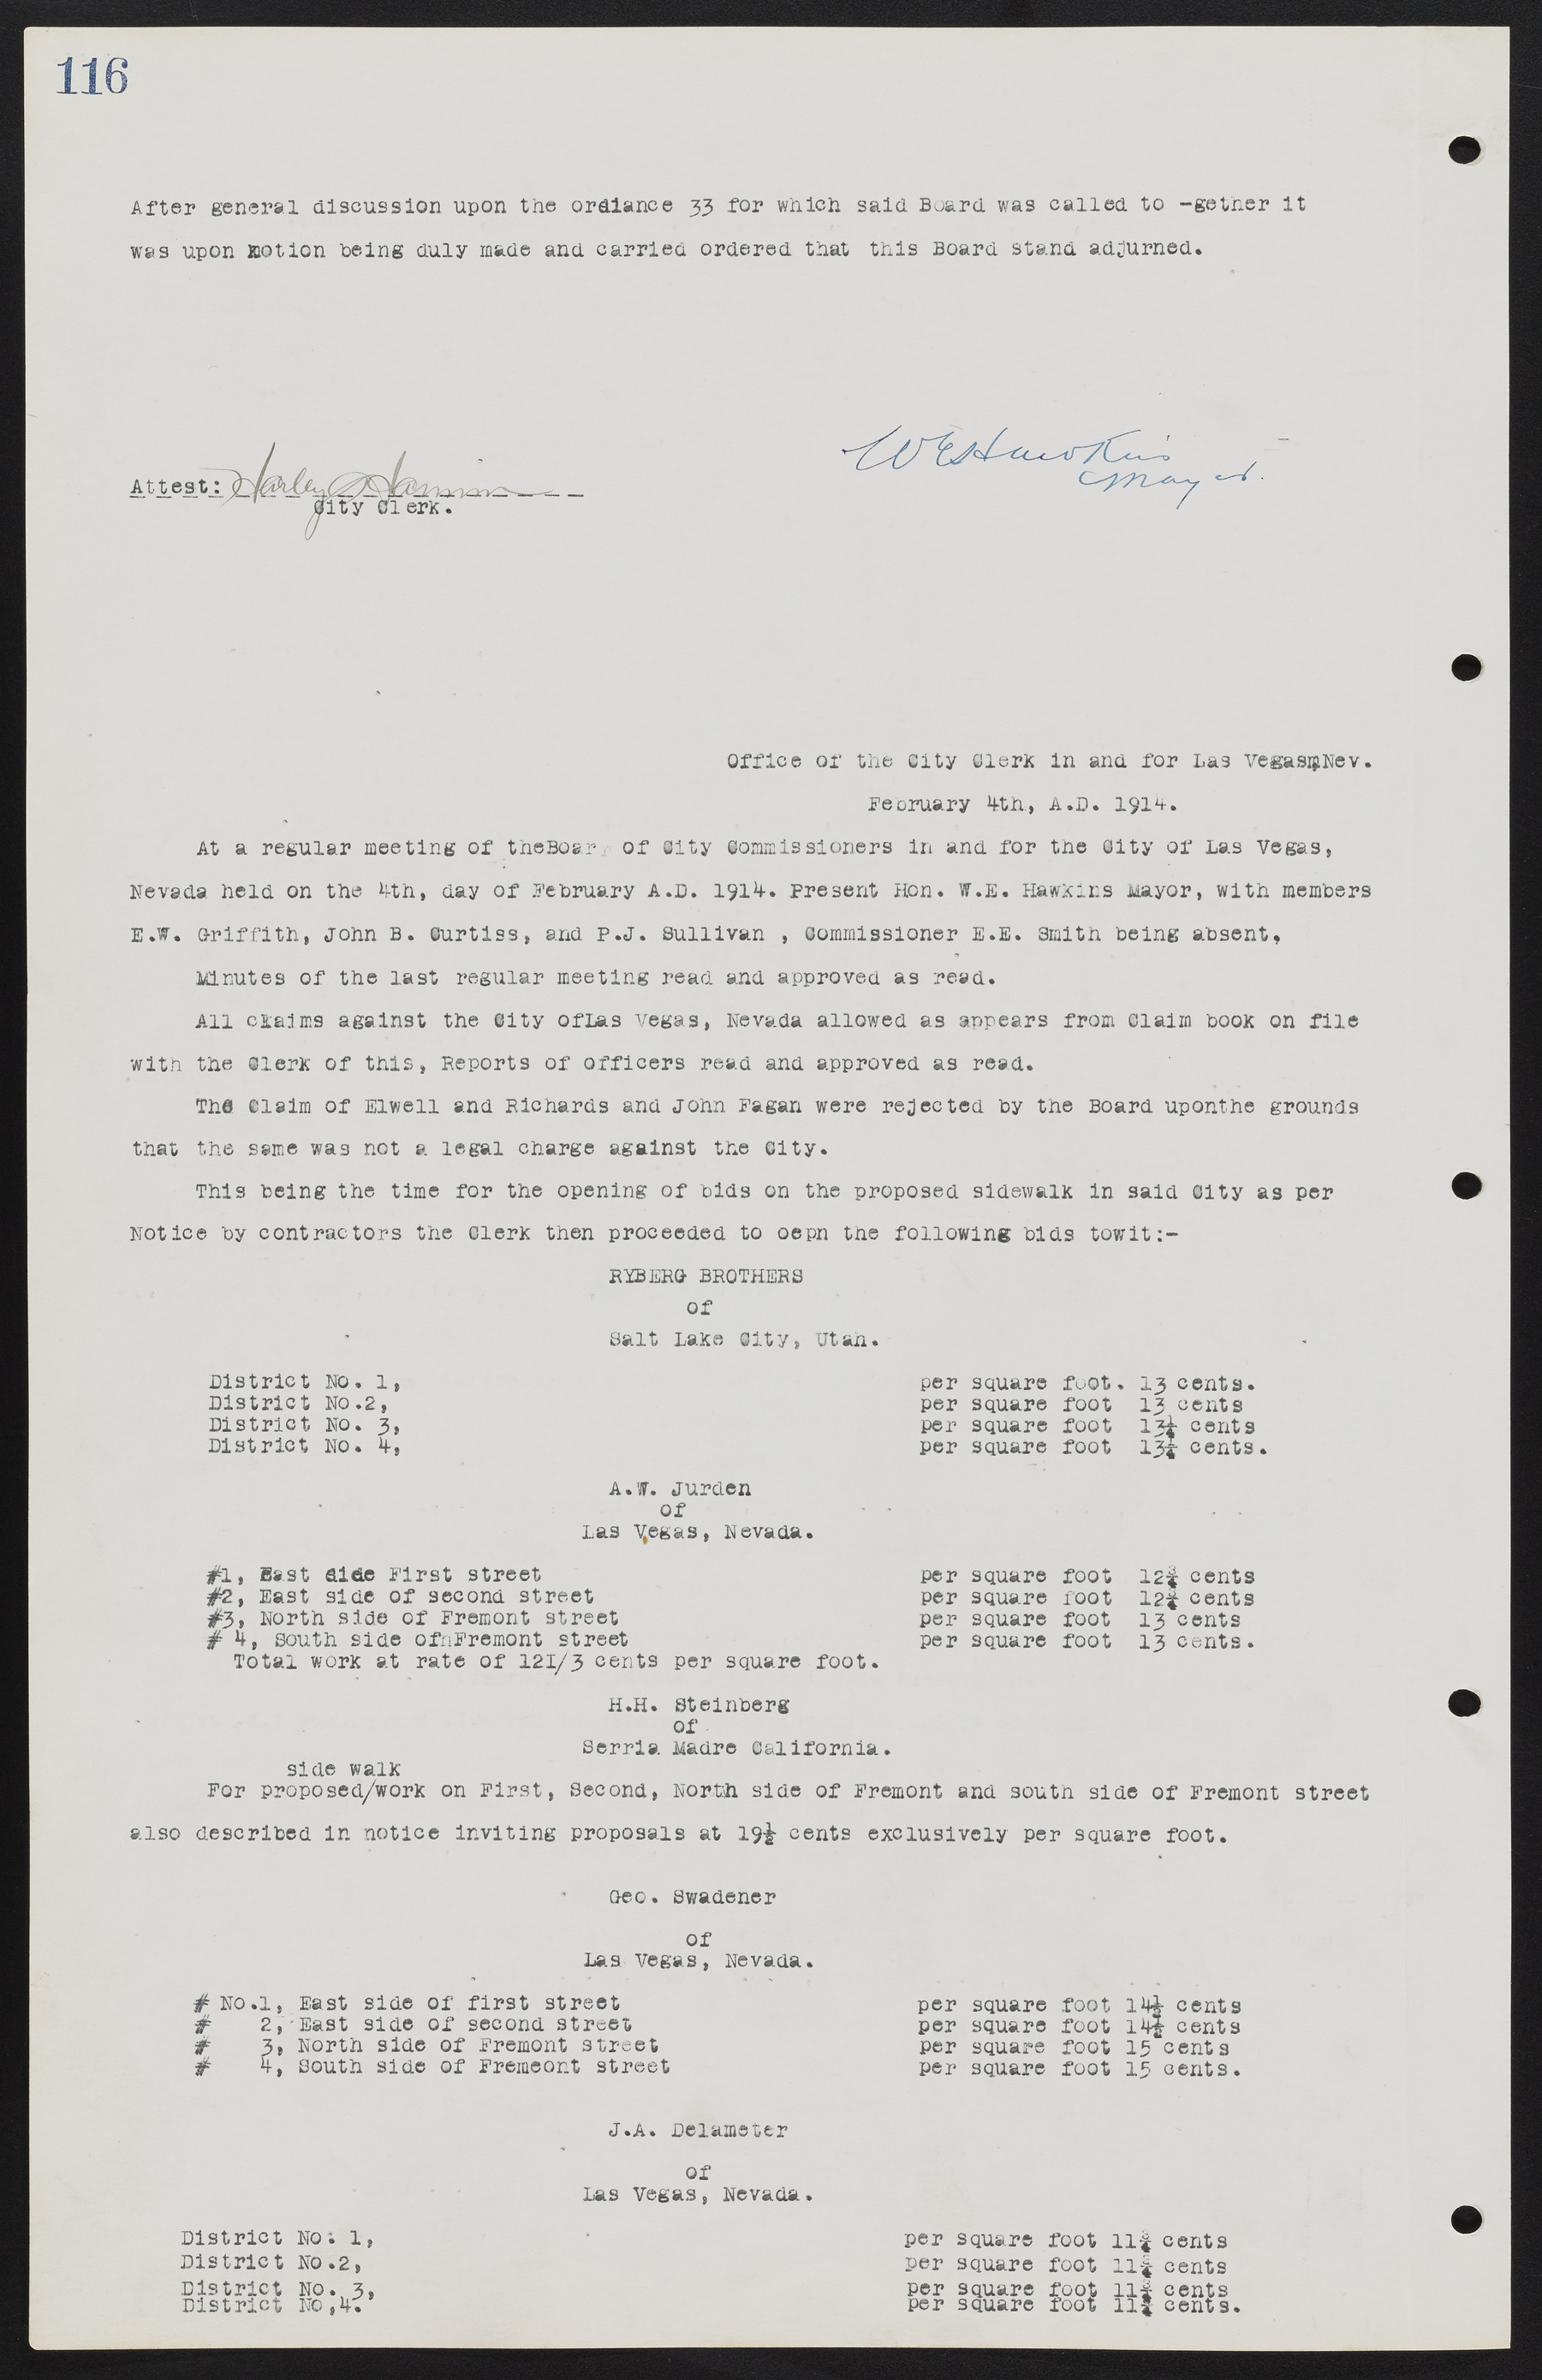 Las Vegas City Commission Minutes, June 22, 1911 to February 7, 1922, lvc000001-130